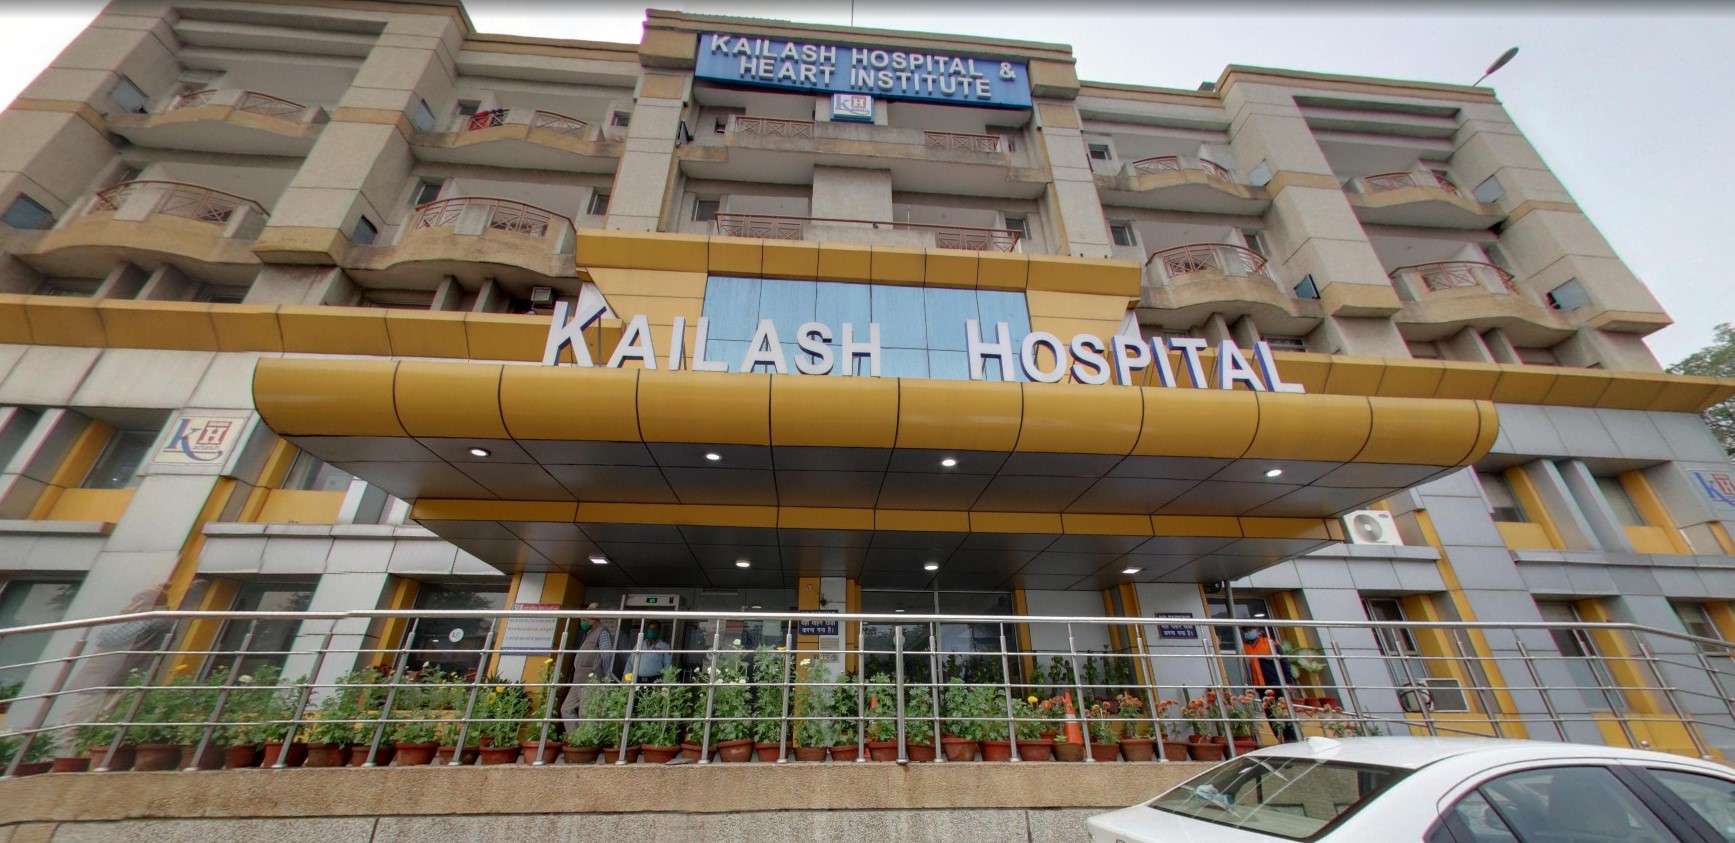 Kailash Hospital-photo